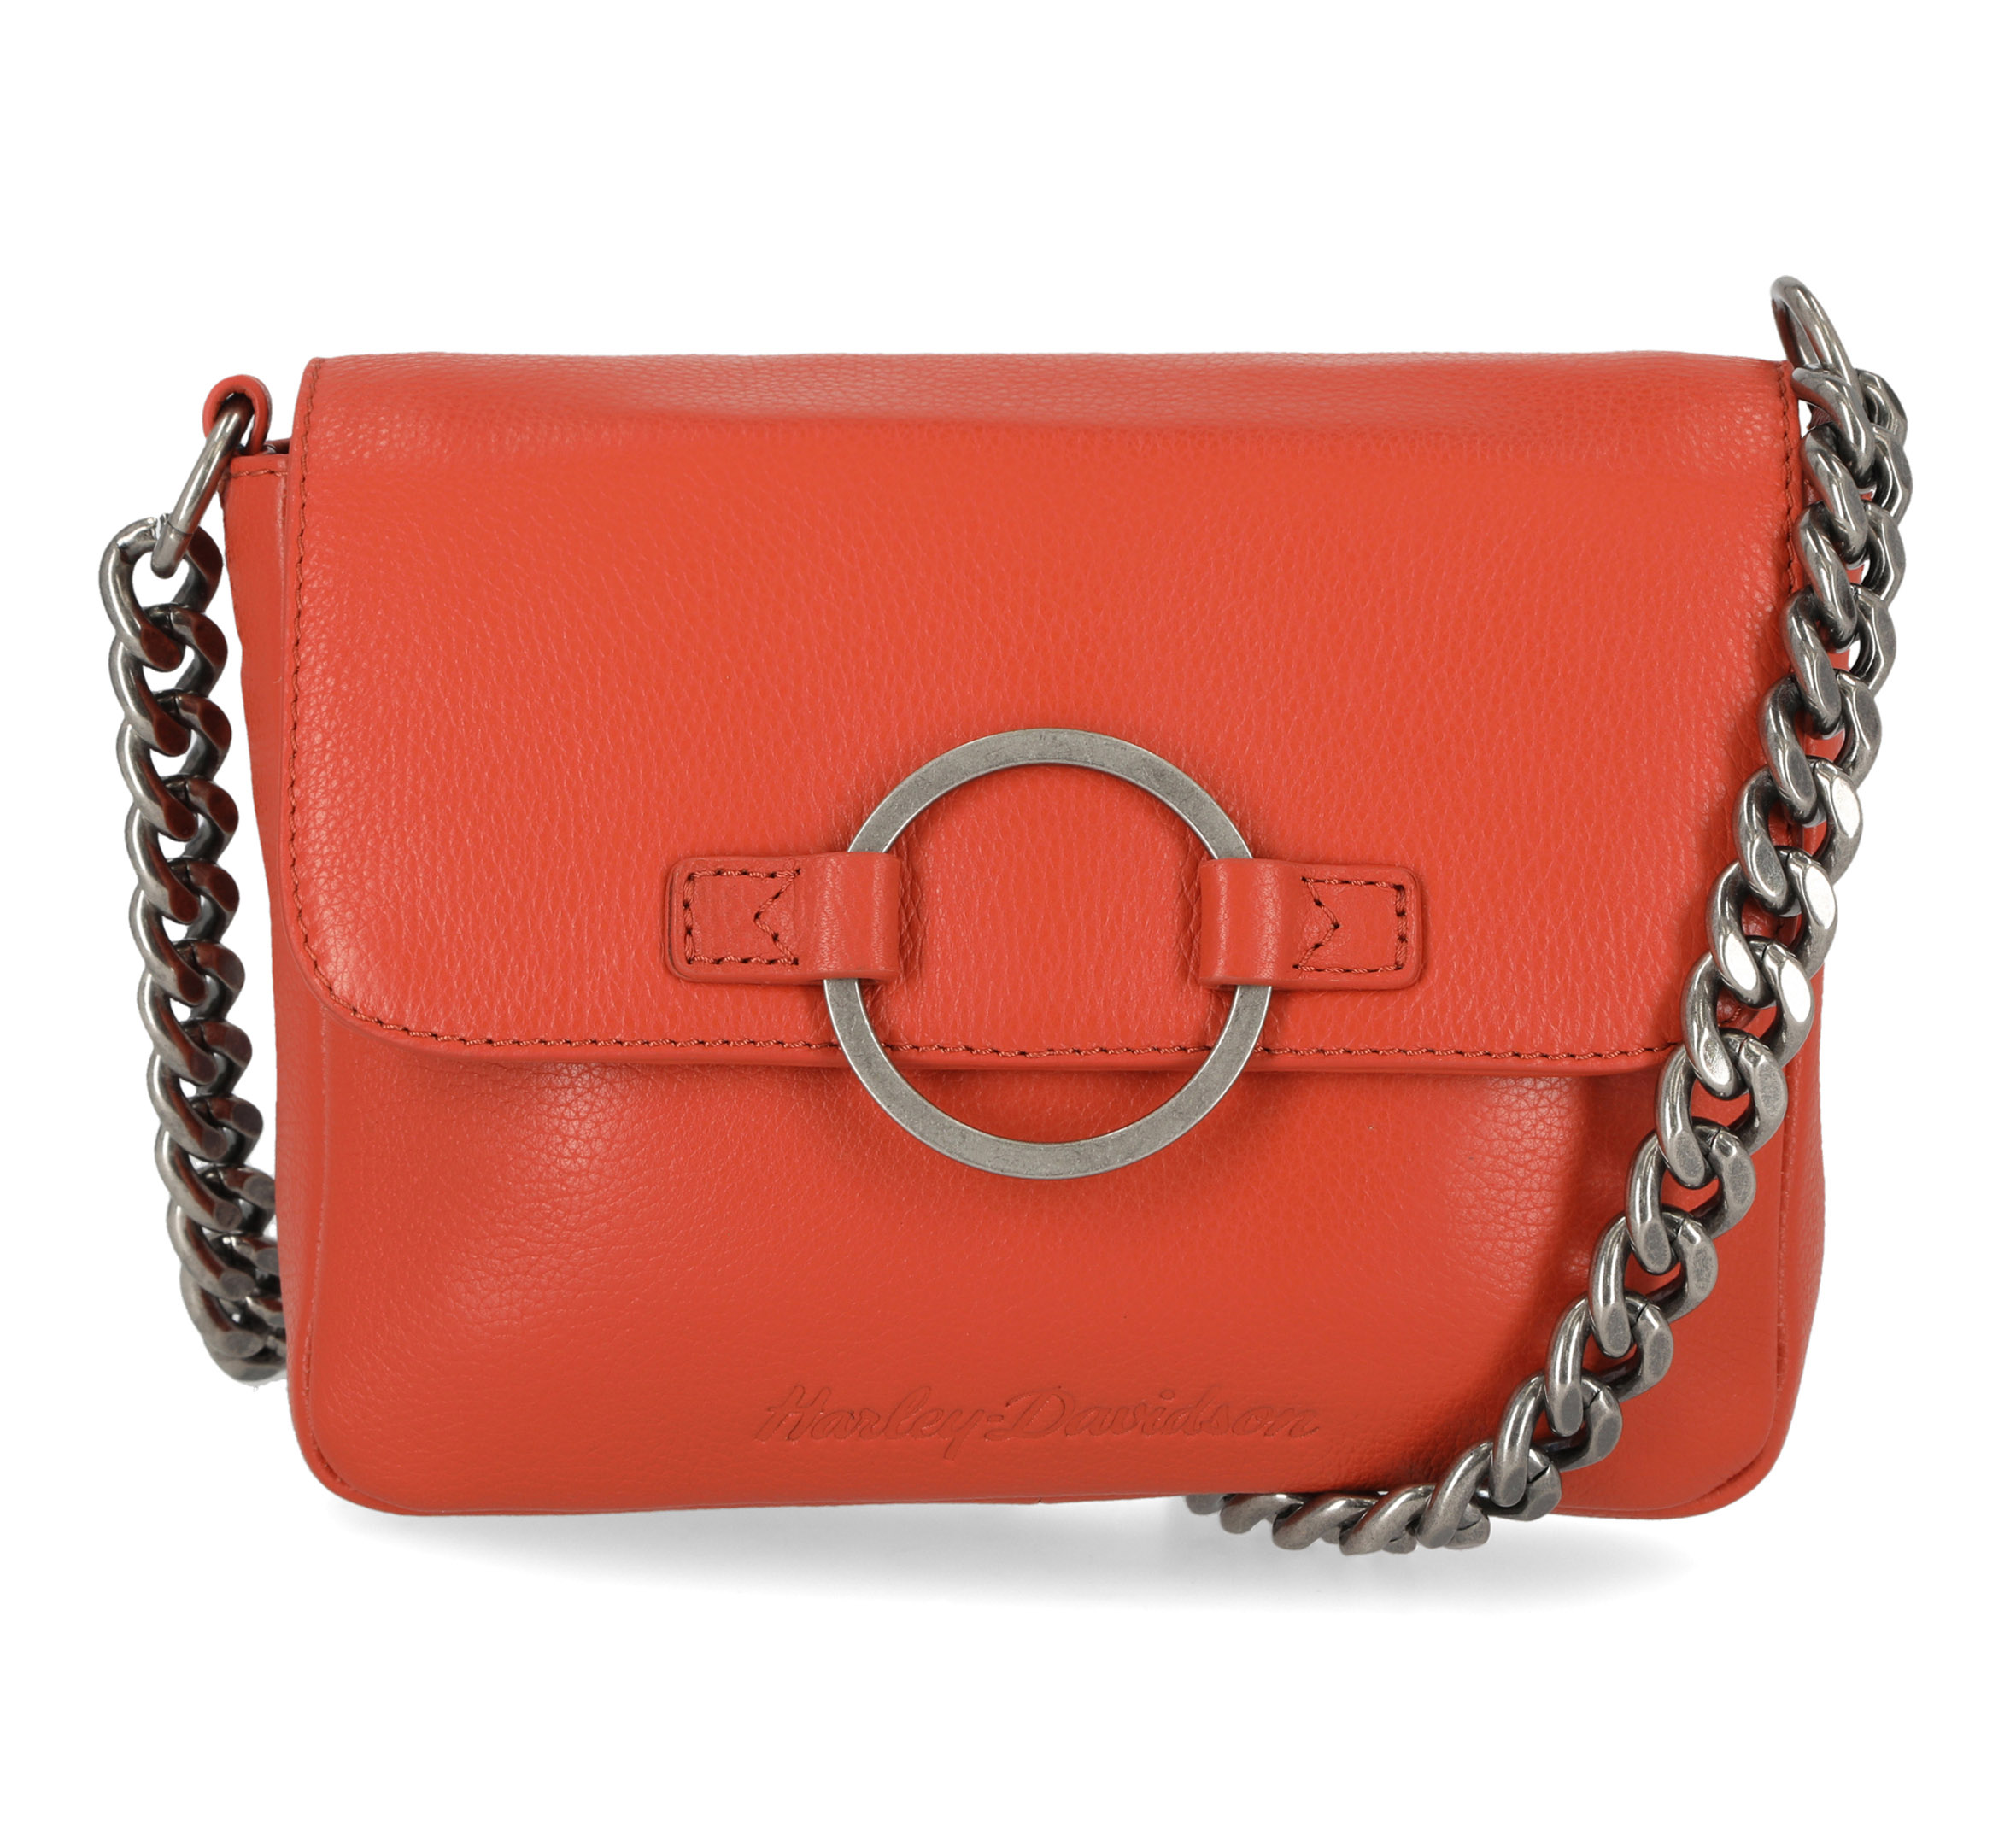 Buy Leather Handbags, Purses, Wallets & More - Derek Alexander